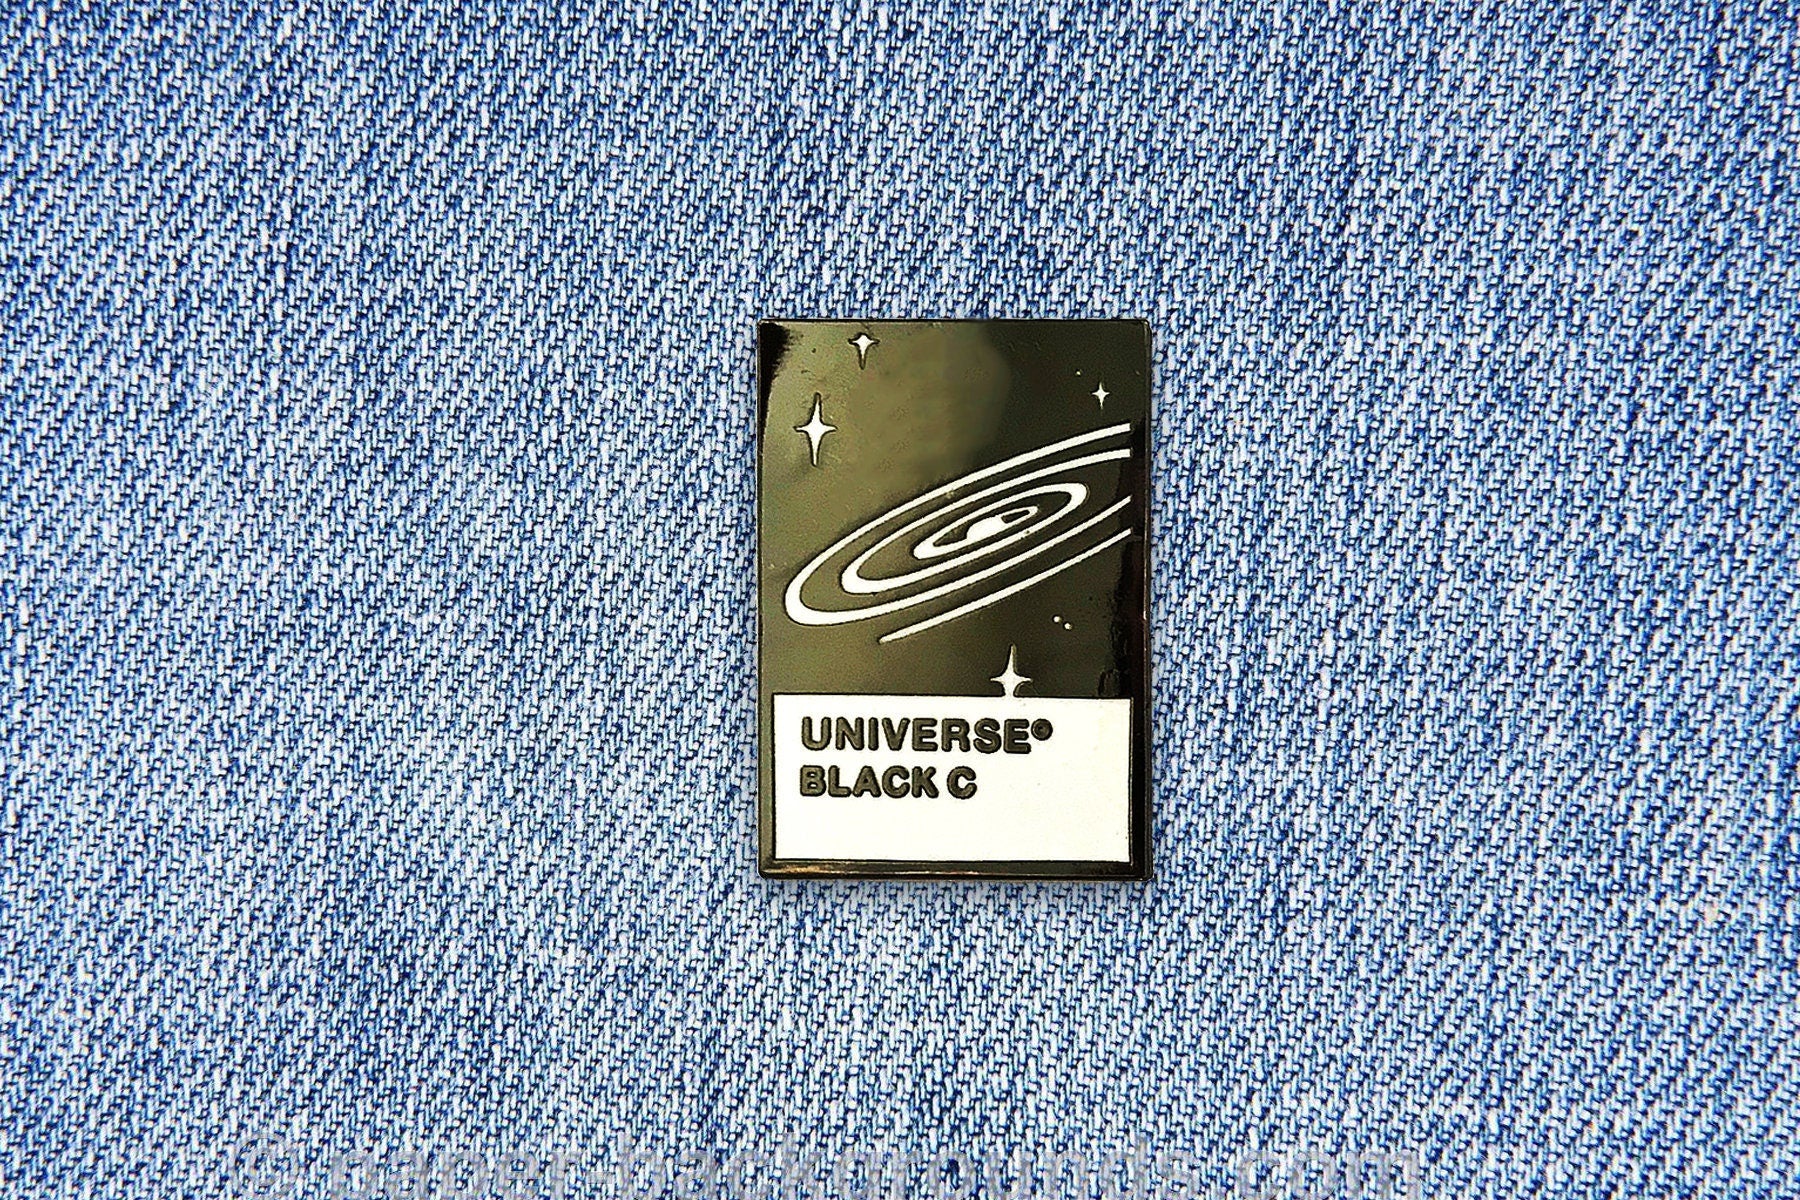 Universe Black Pantone-Parody Enamel Pin - Space & Astronomy Galaxy Brooch- Sci-fi Lovers Gift